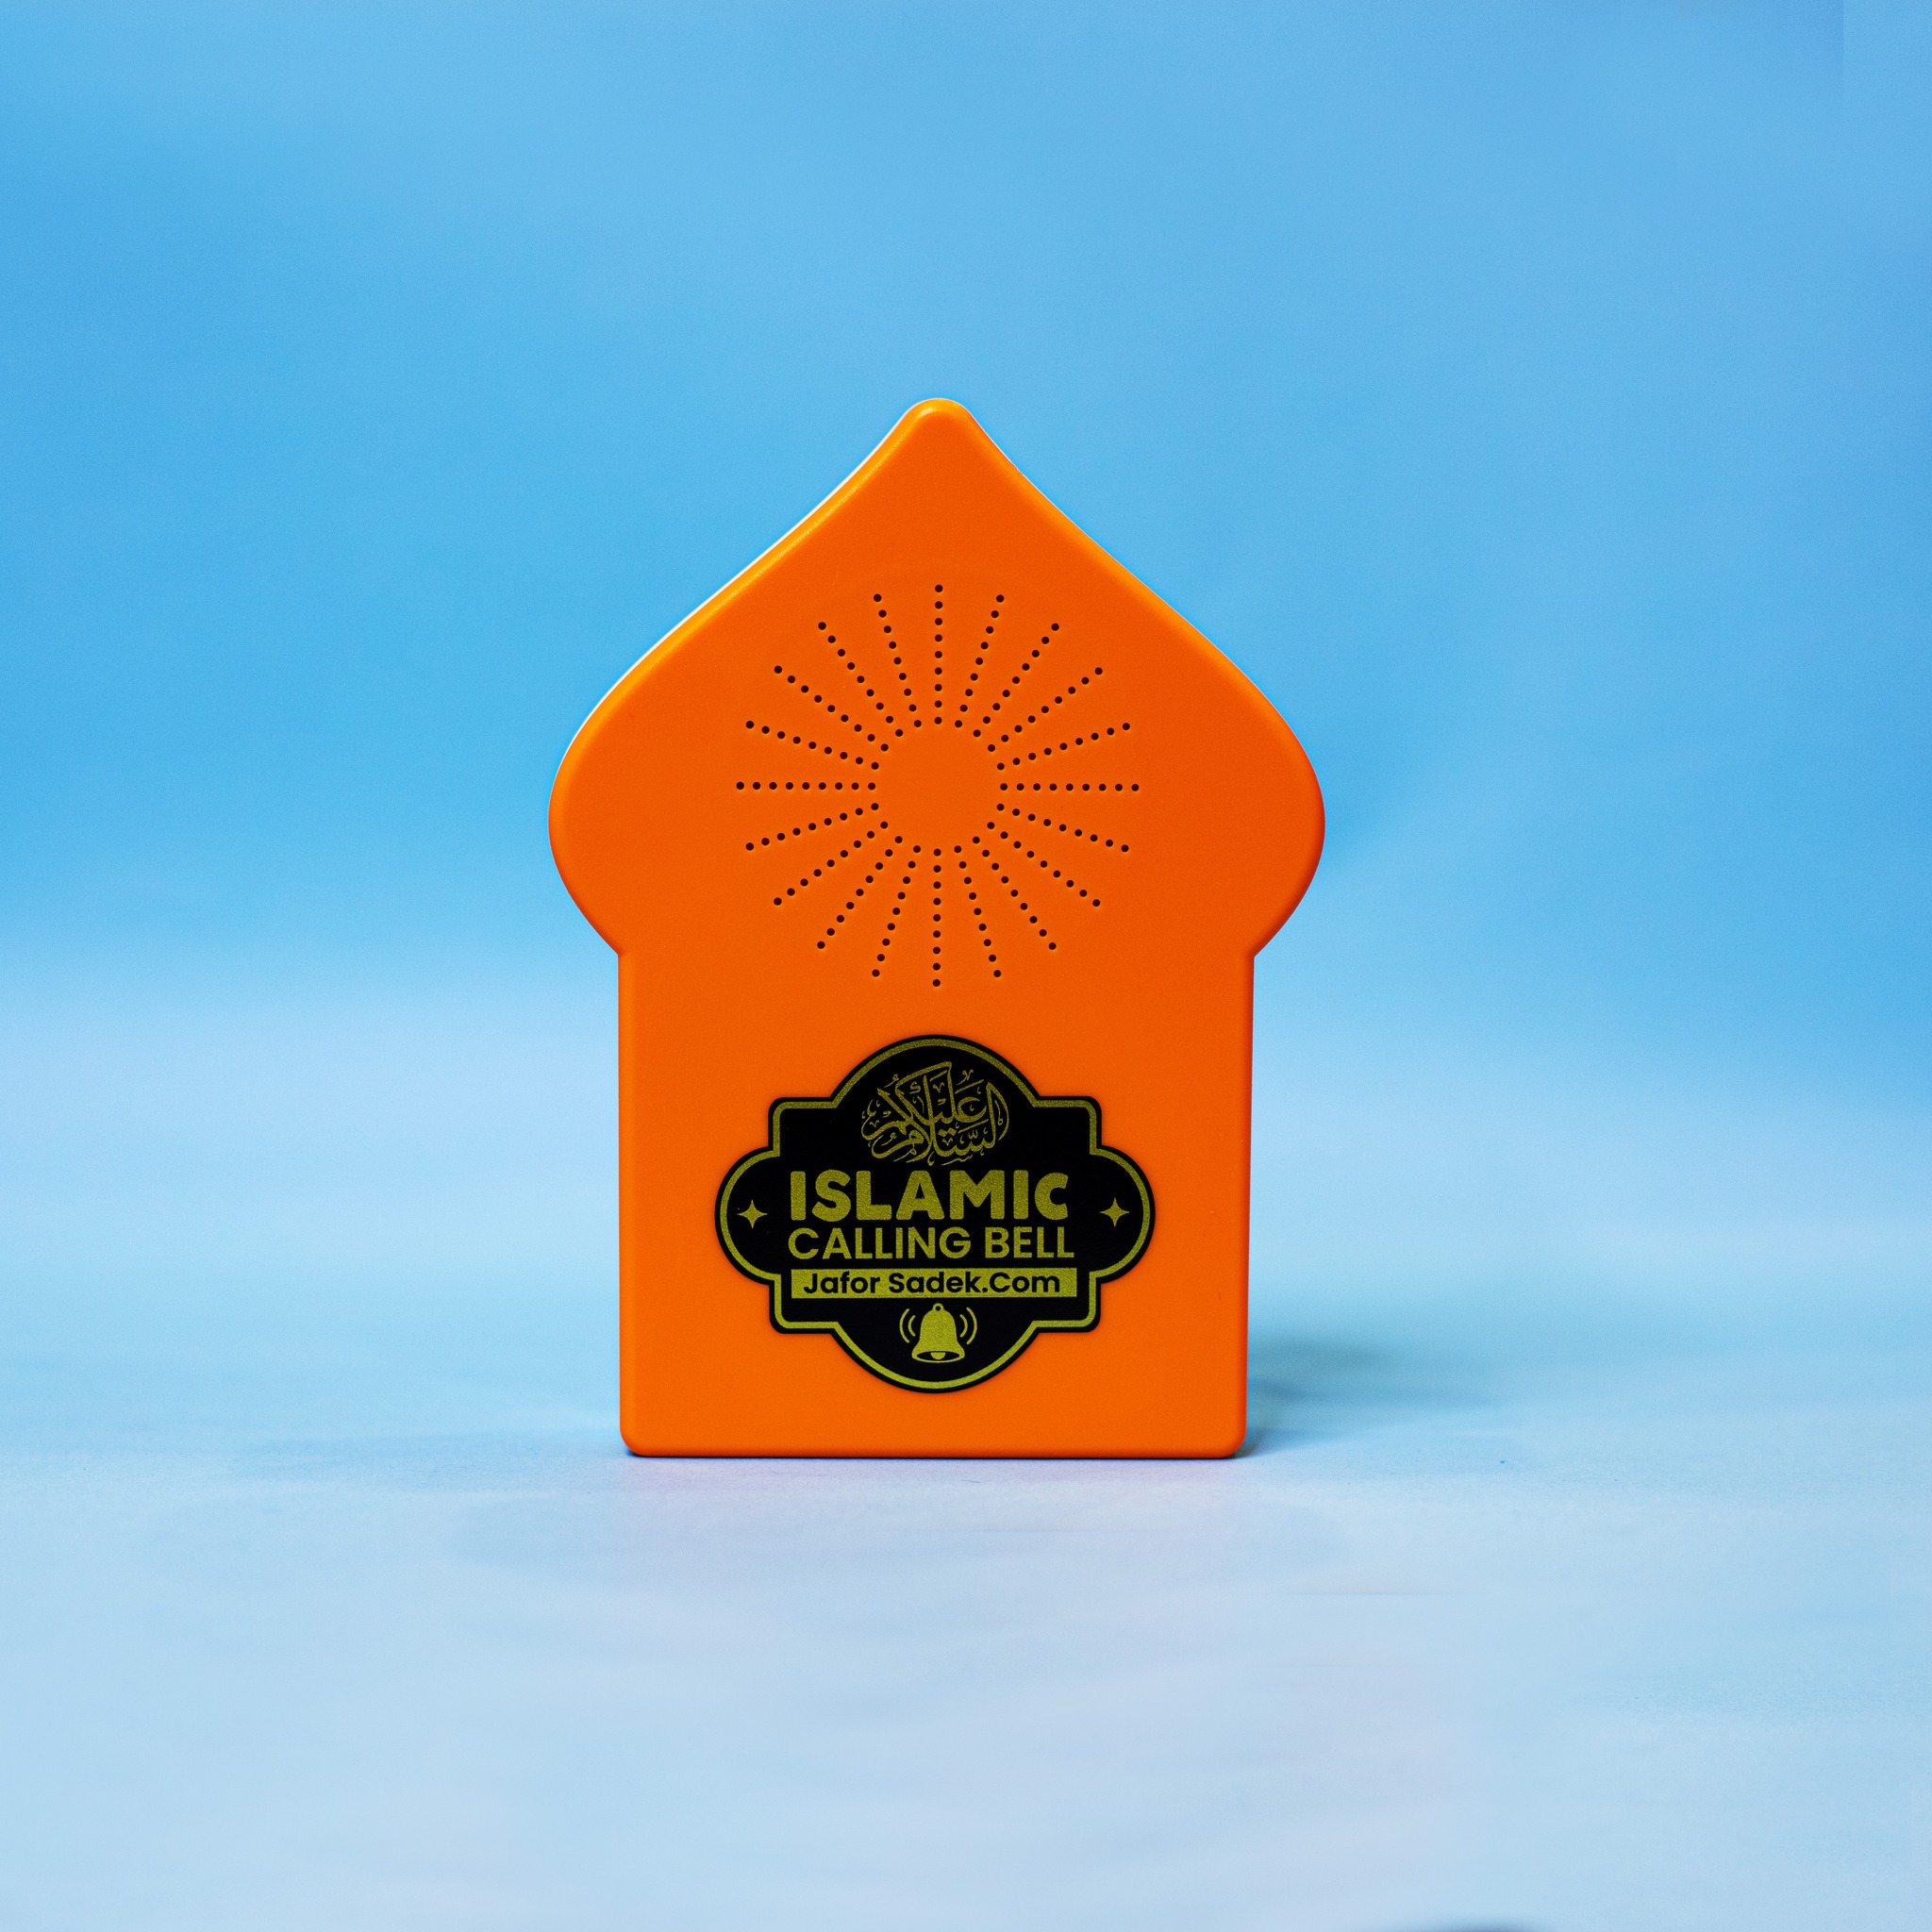 Islamic calling bell